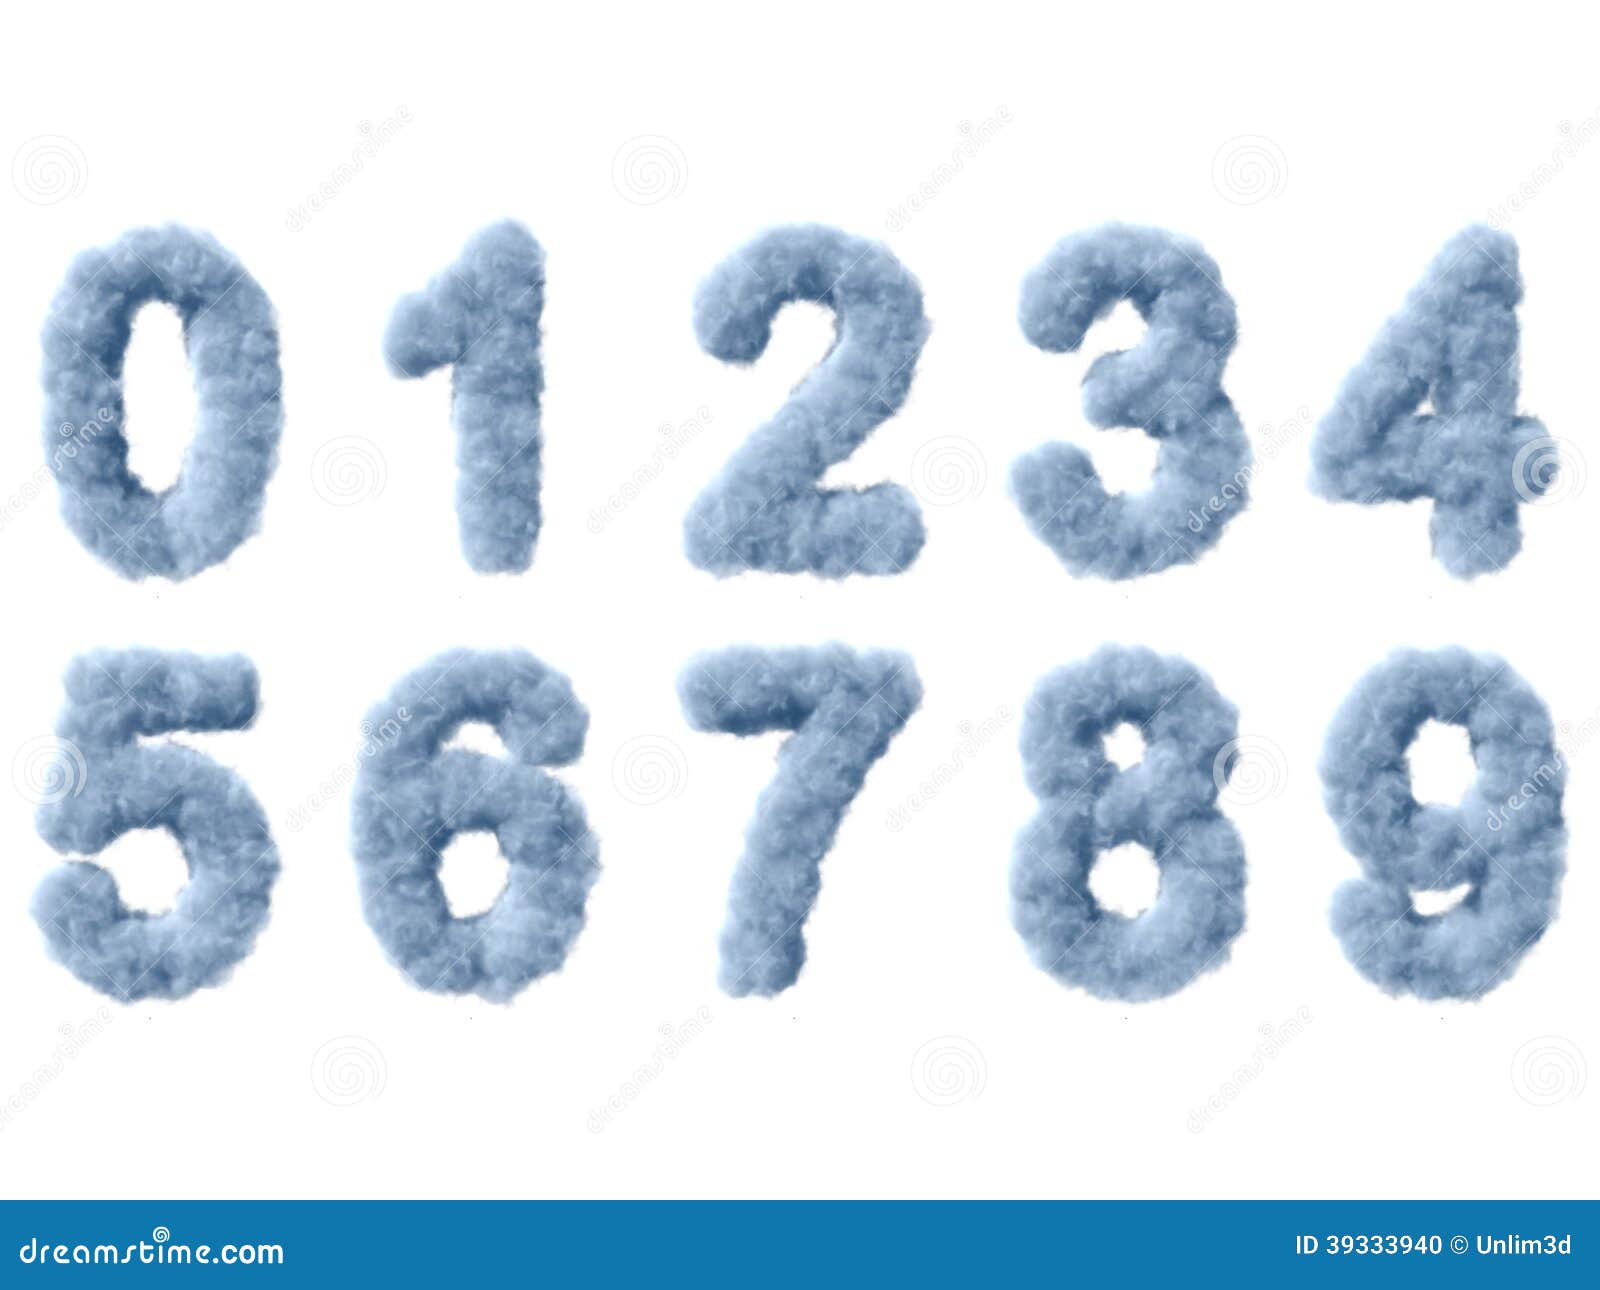 Снежок цифра 2. Цифры из снега. Цифры в виде облака. Цифры из облаков. Ледяные цифры.